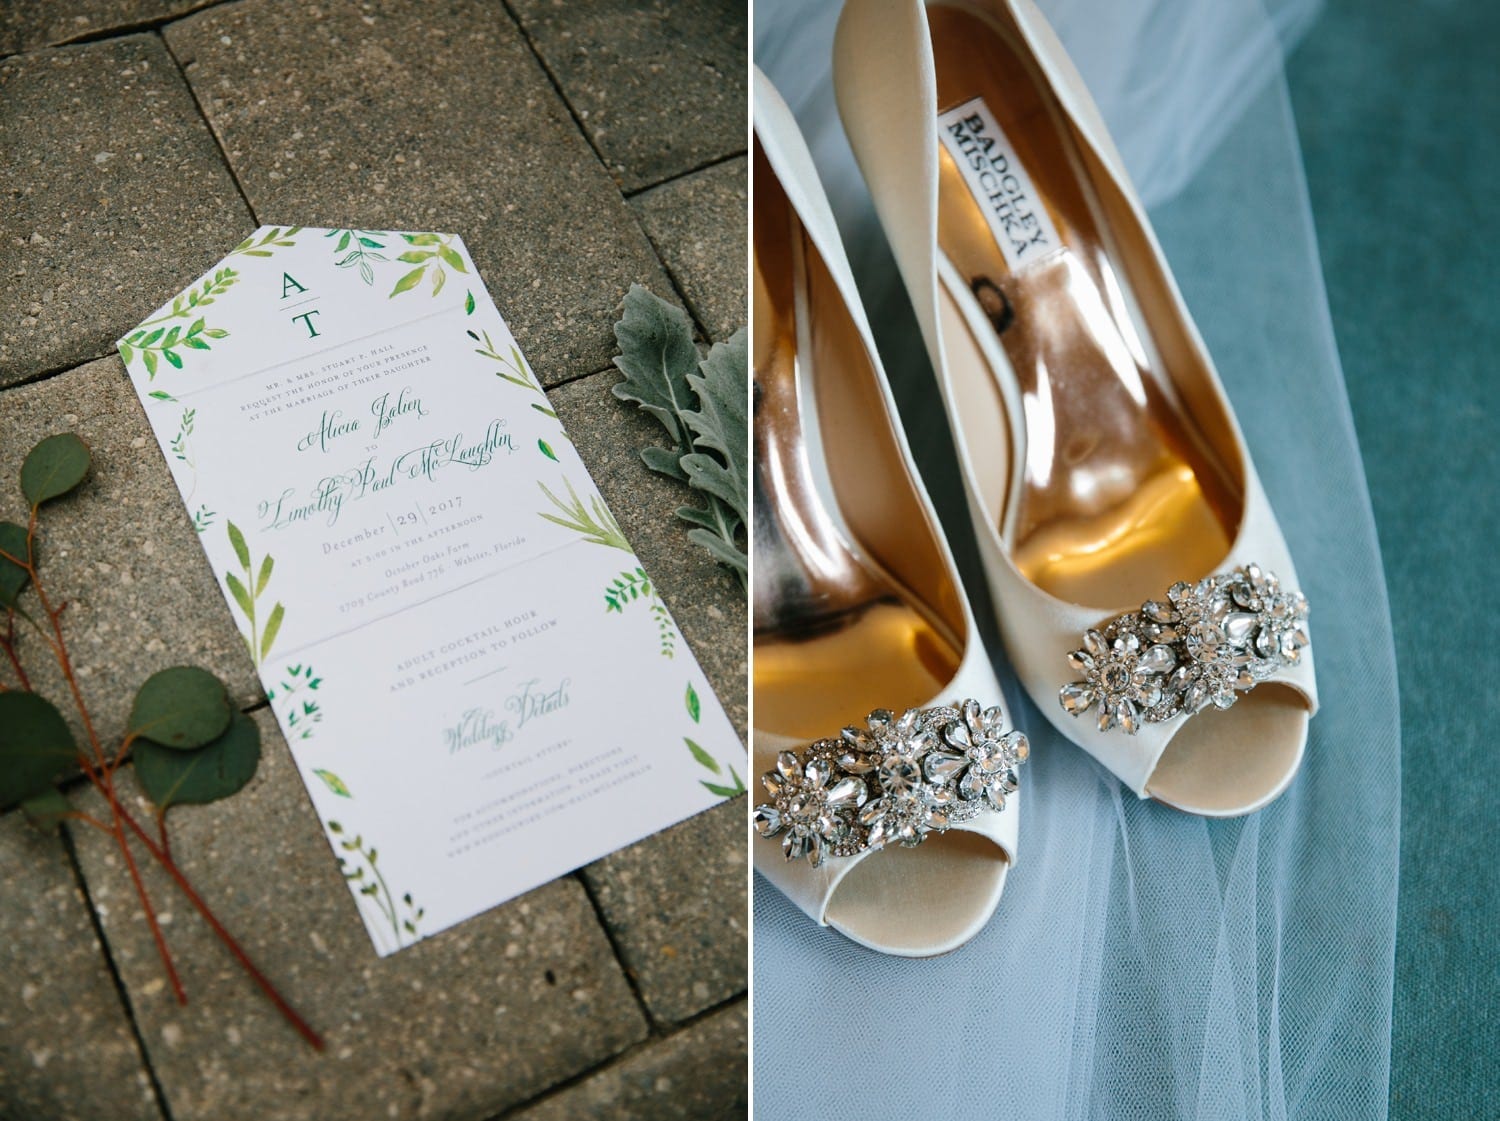 Elegant Farm Wedding at October Oaks. Wedding invitation and wedding shoes